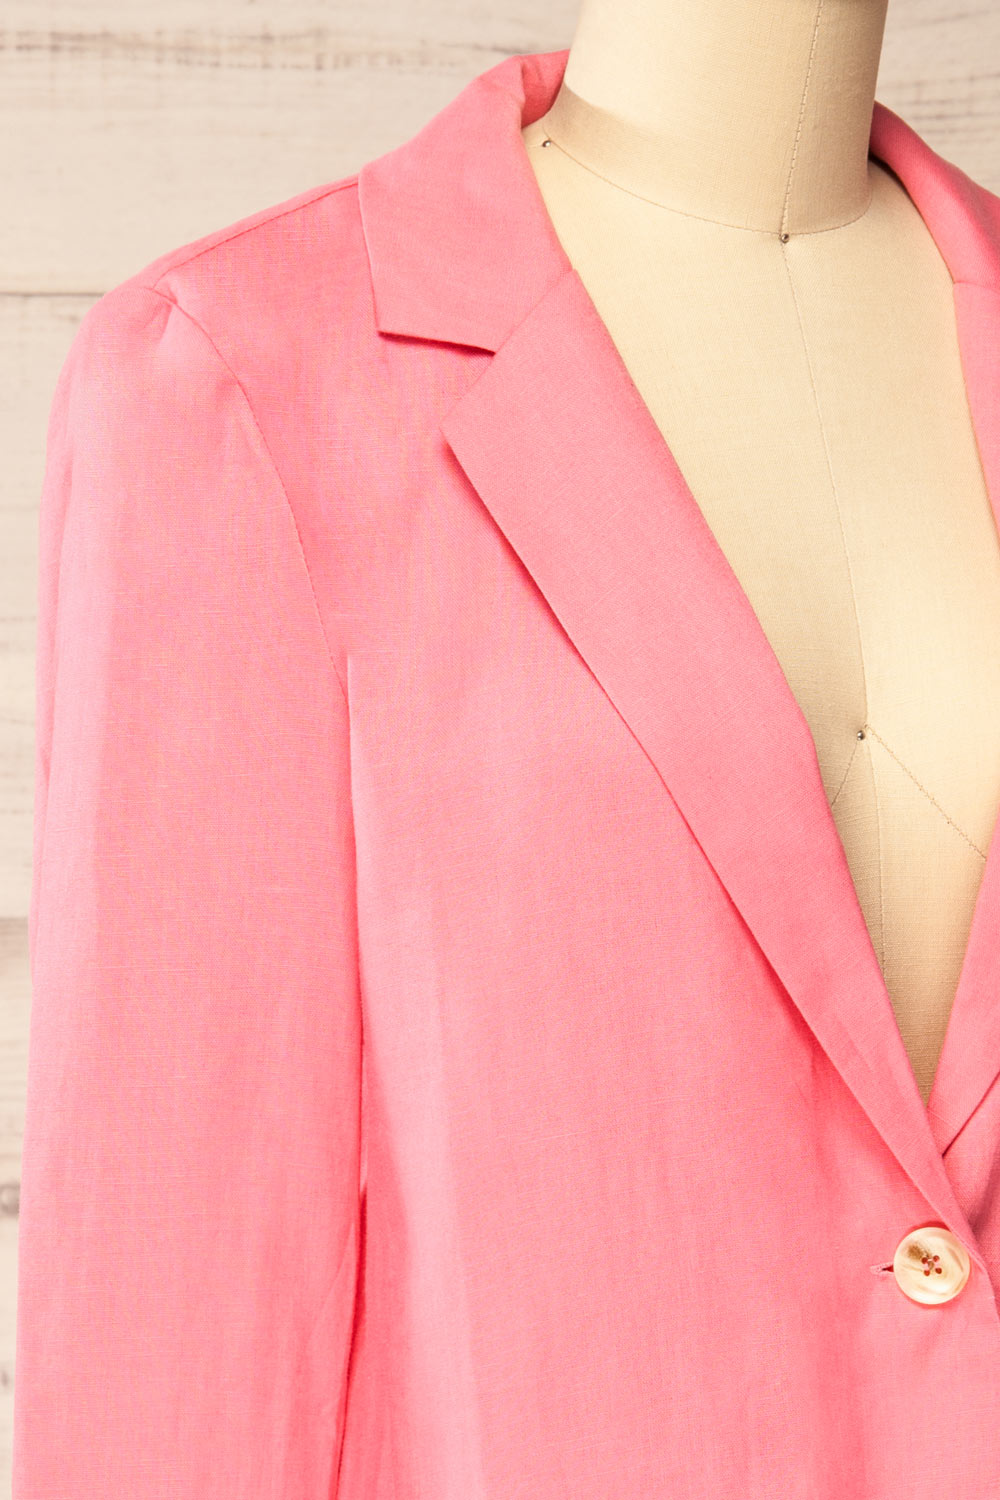 Sucunduri Pink Light Linen Blazer | La petite garçonne side